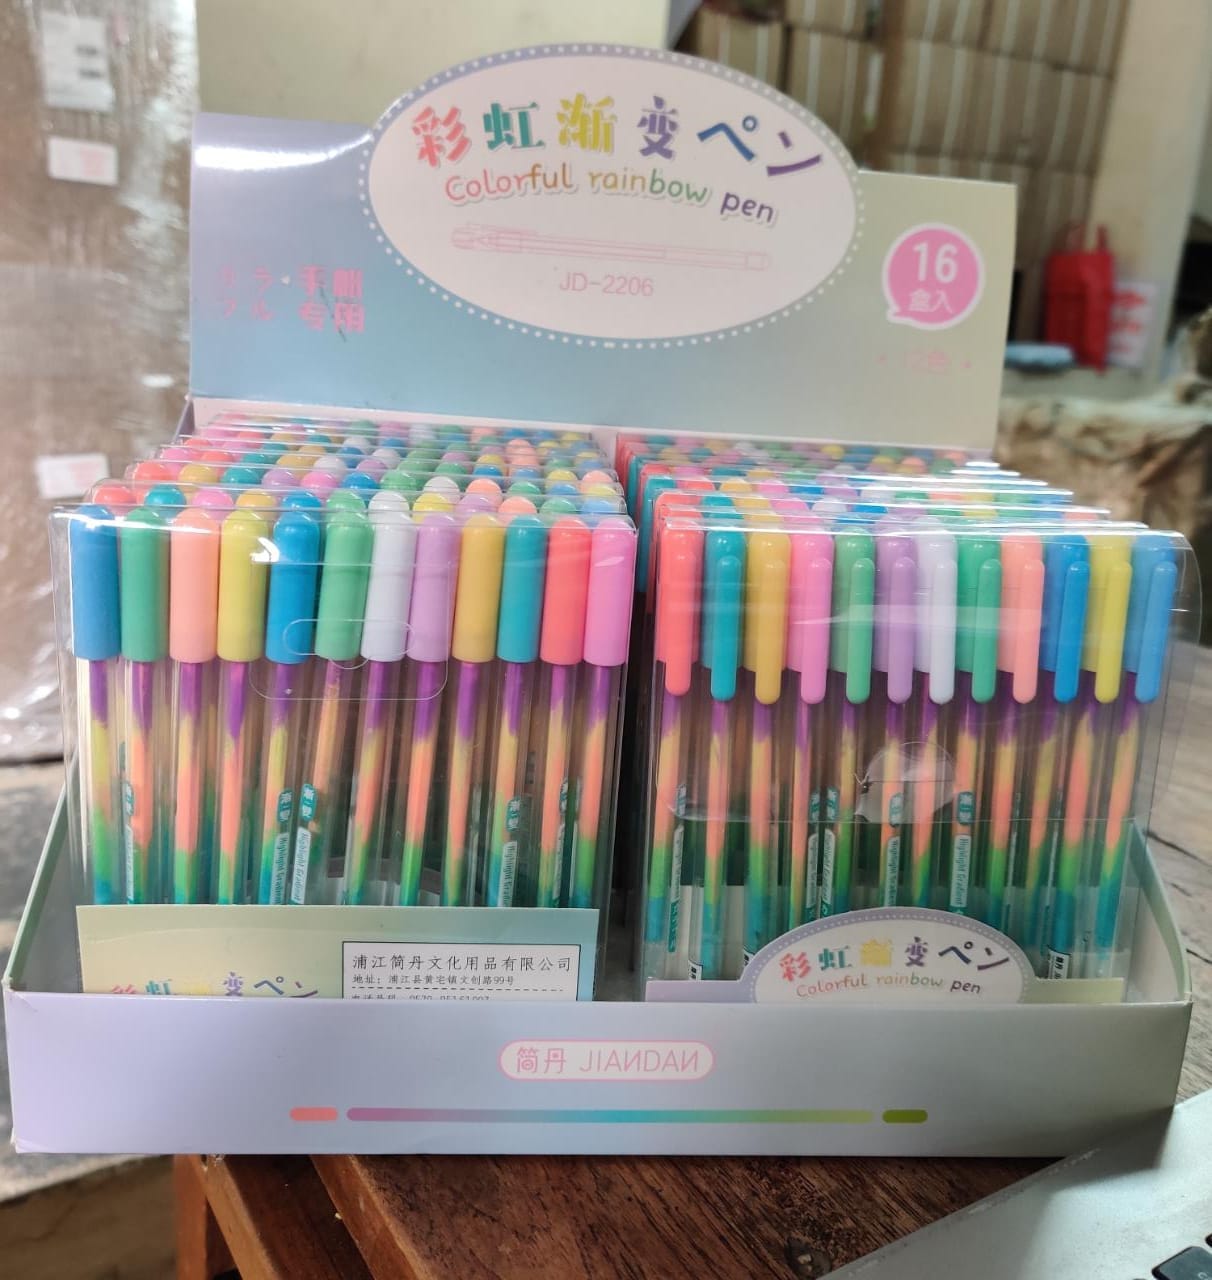 Pastel Morandi Gel Pens (1 PCS)- Refillable